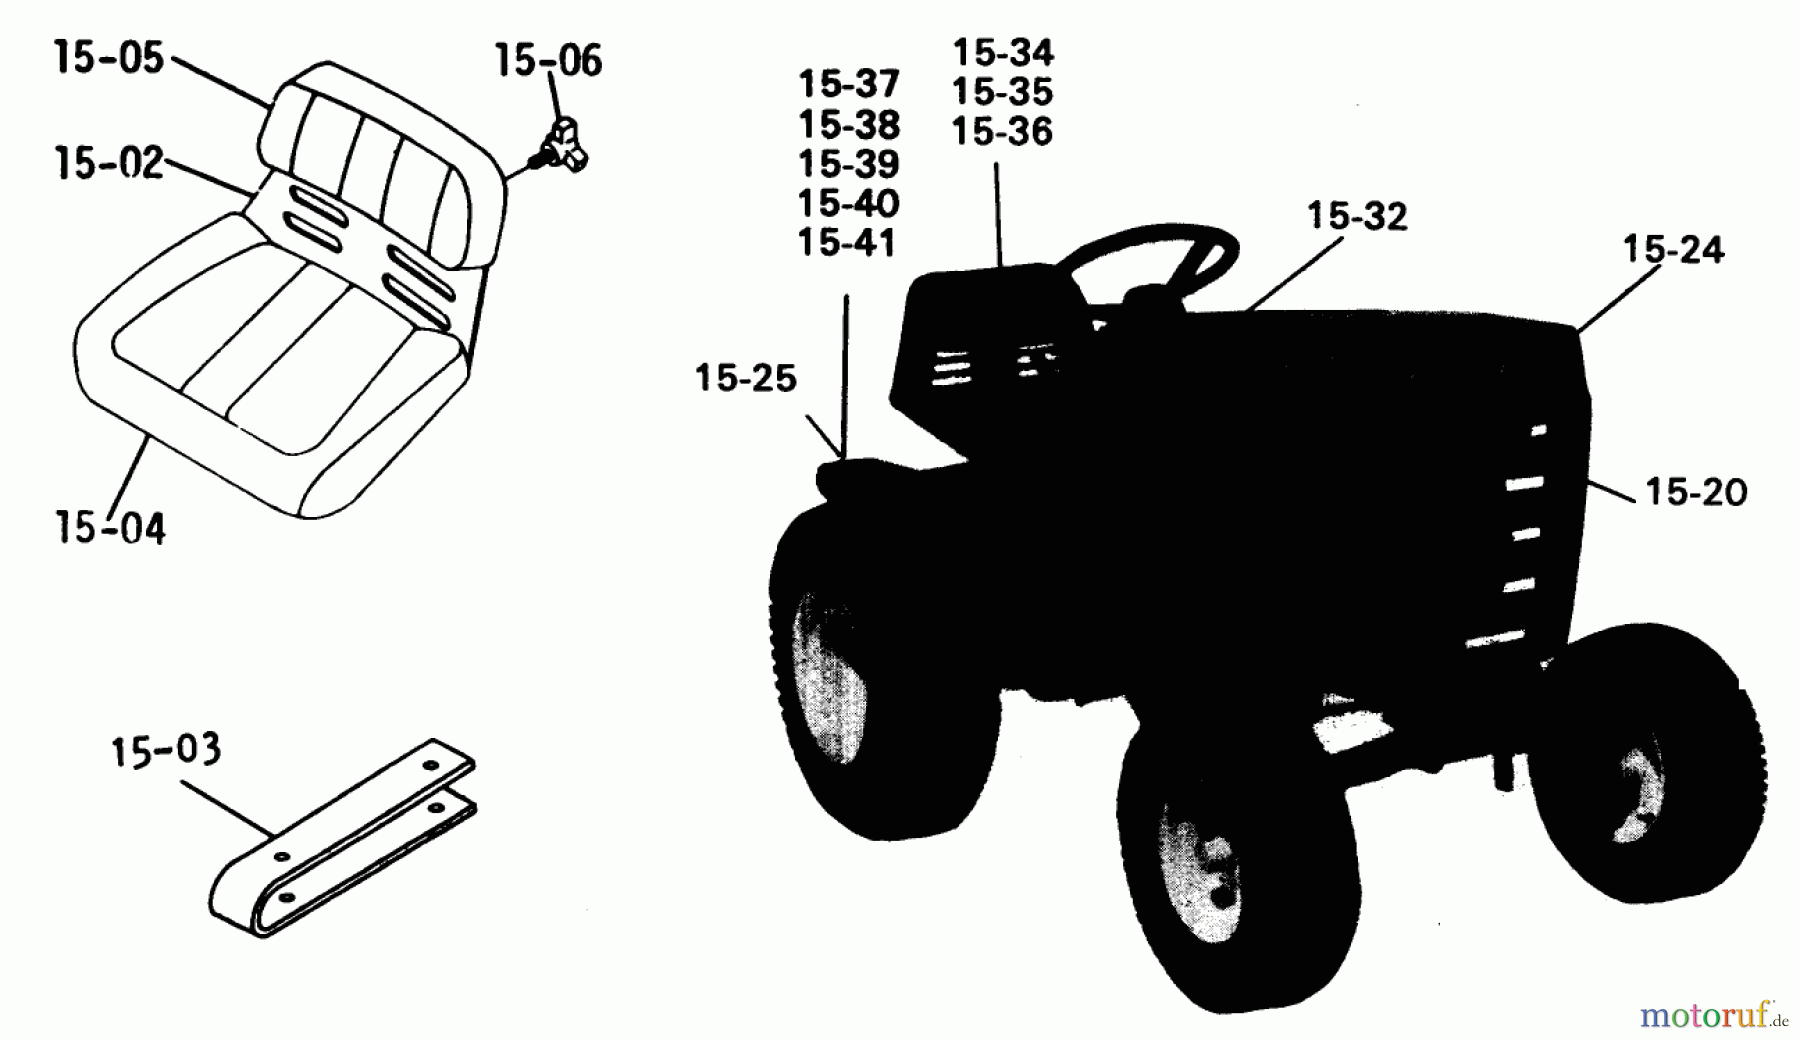  Toro Neu Mowers, Lawn & Garden Tractor Seite 1 1-0357 (C-120) - Toro C-120 8-Speed Tractor, 1975 15.000 SEATS, DECALS MISC. TRIM (FIG. 15)